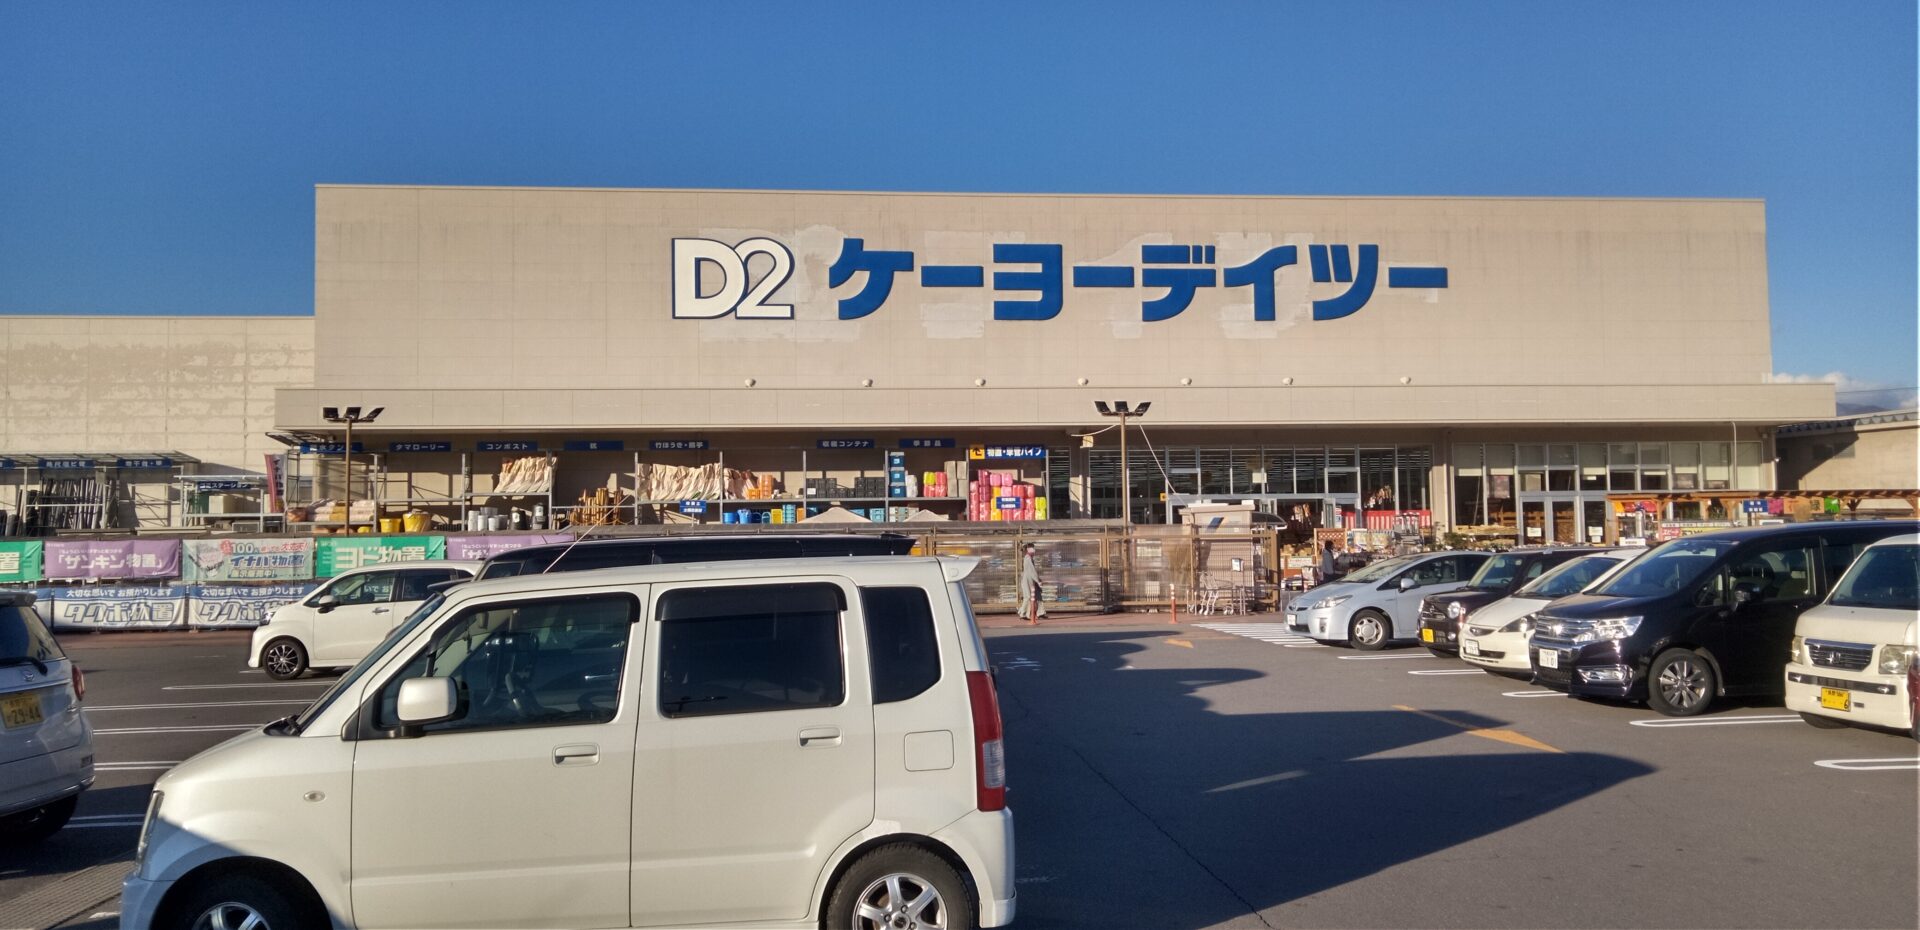 D2 ケーヨーデイツー丸子店